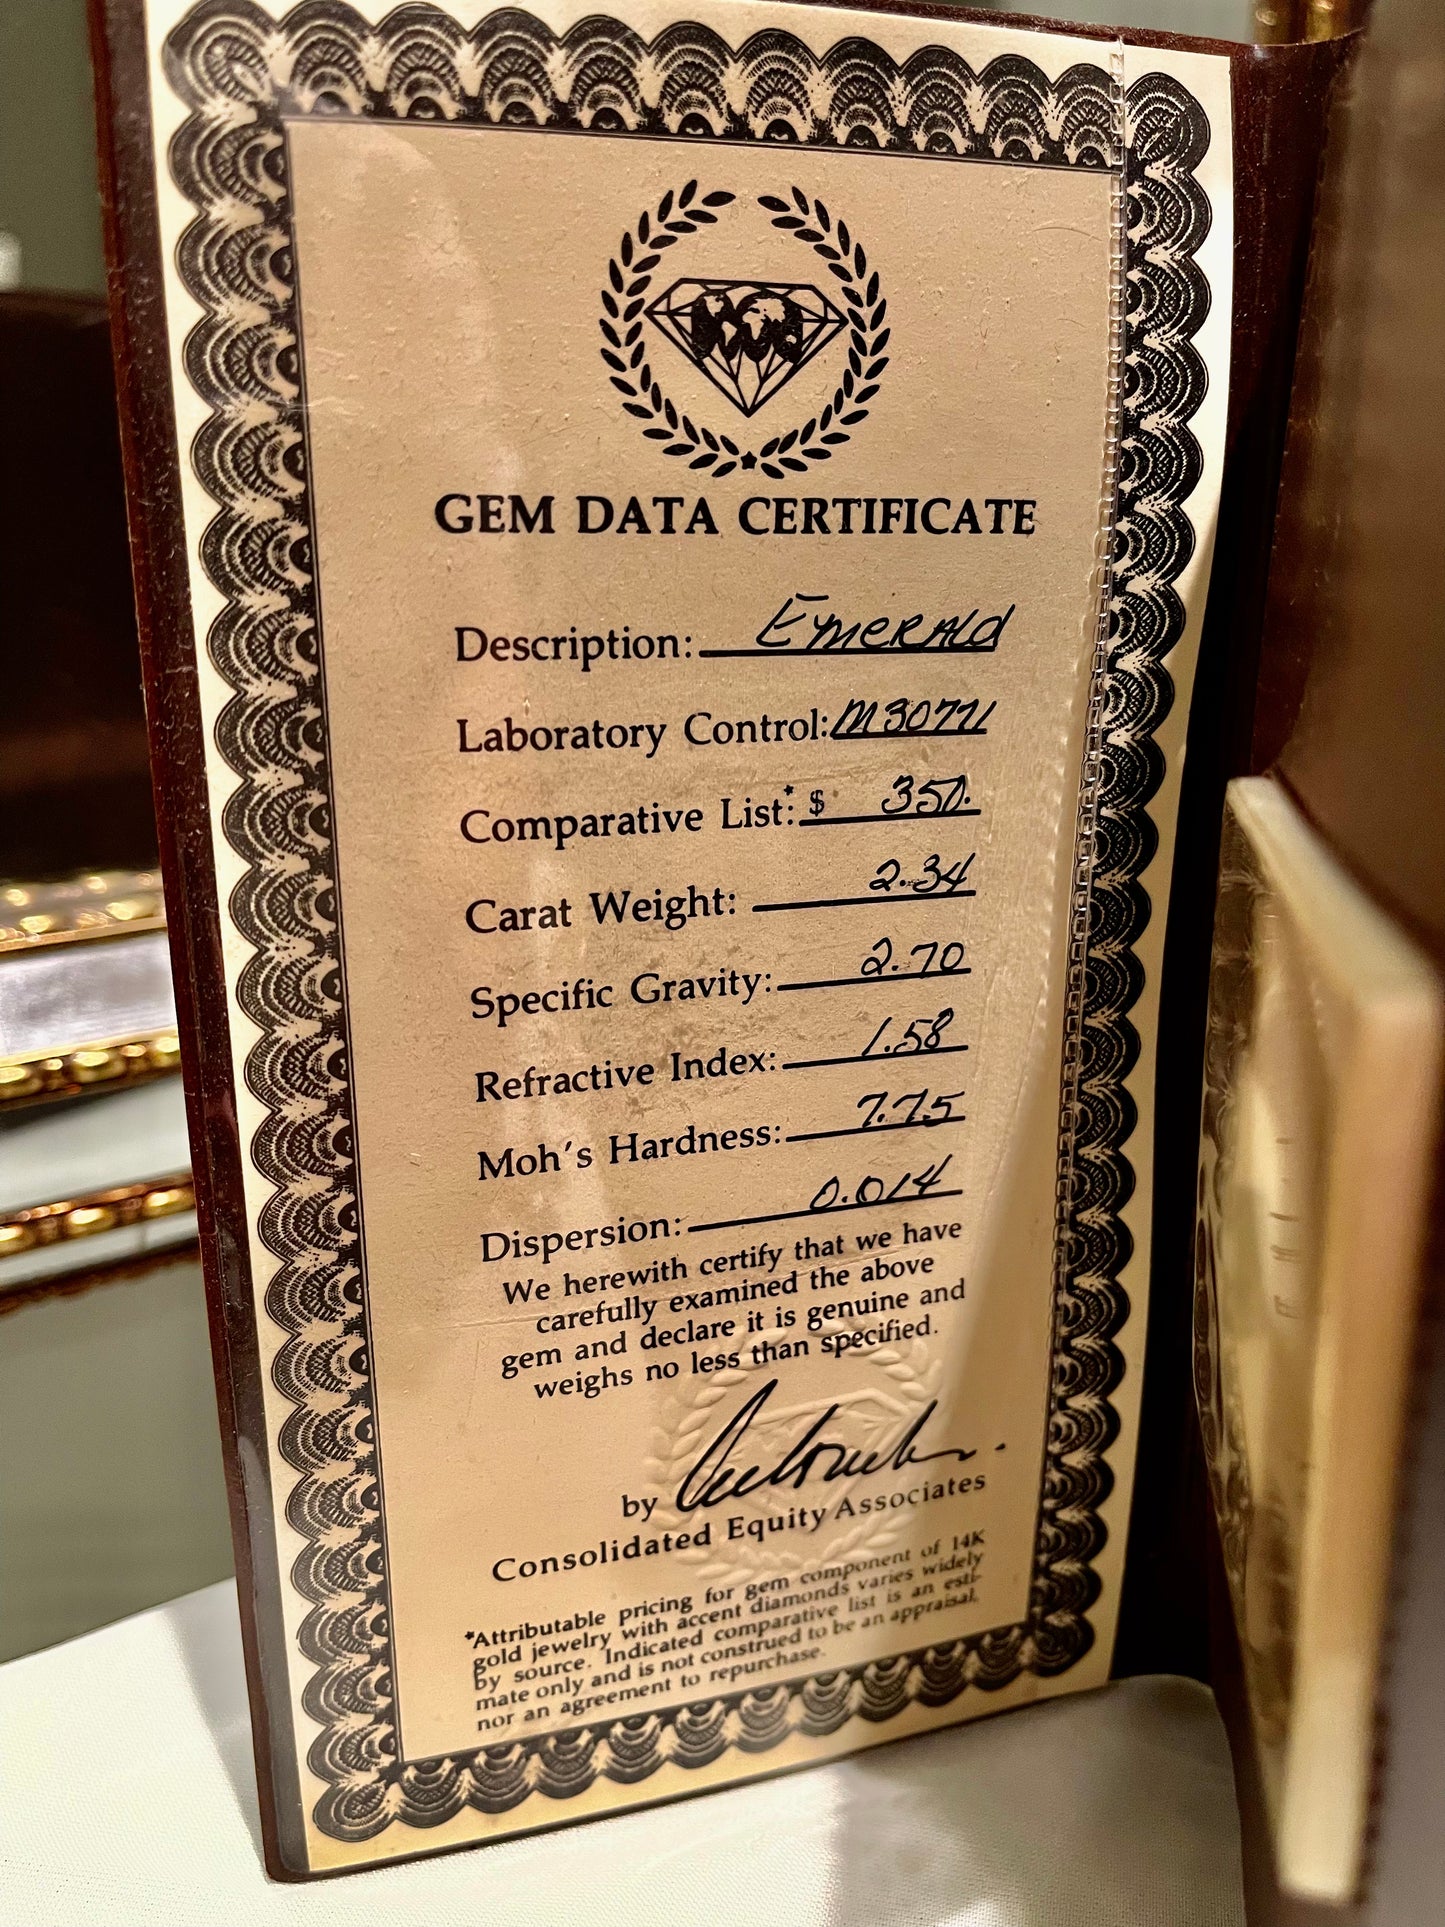 2.34 Carat Weight Natural Emerald with Gem Data Certificate